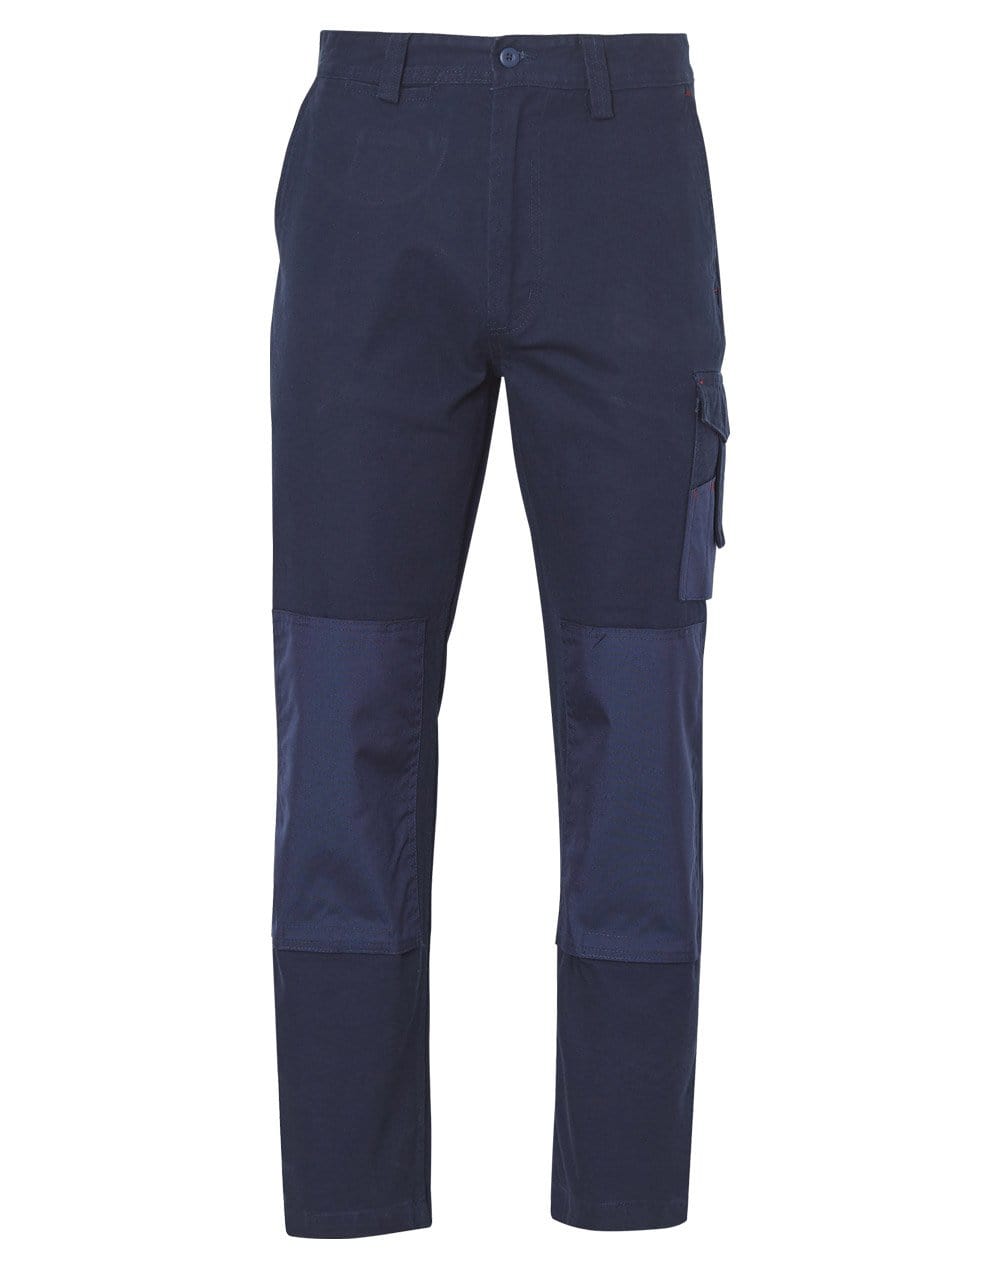 Cordura Durable Work Pants Regular Size WP09 Work Wear Australian Industrial Wear 77R Navy 